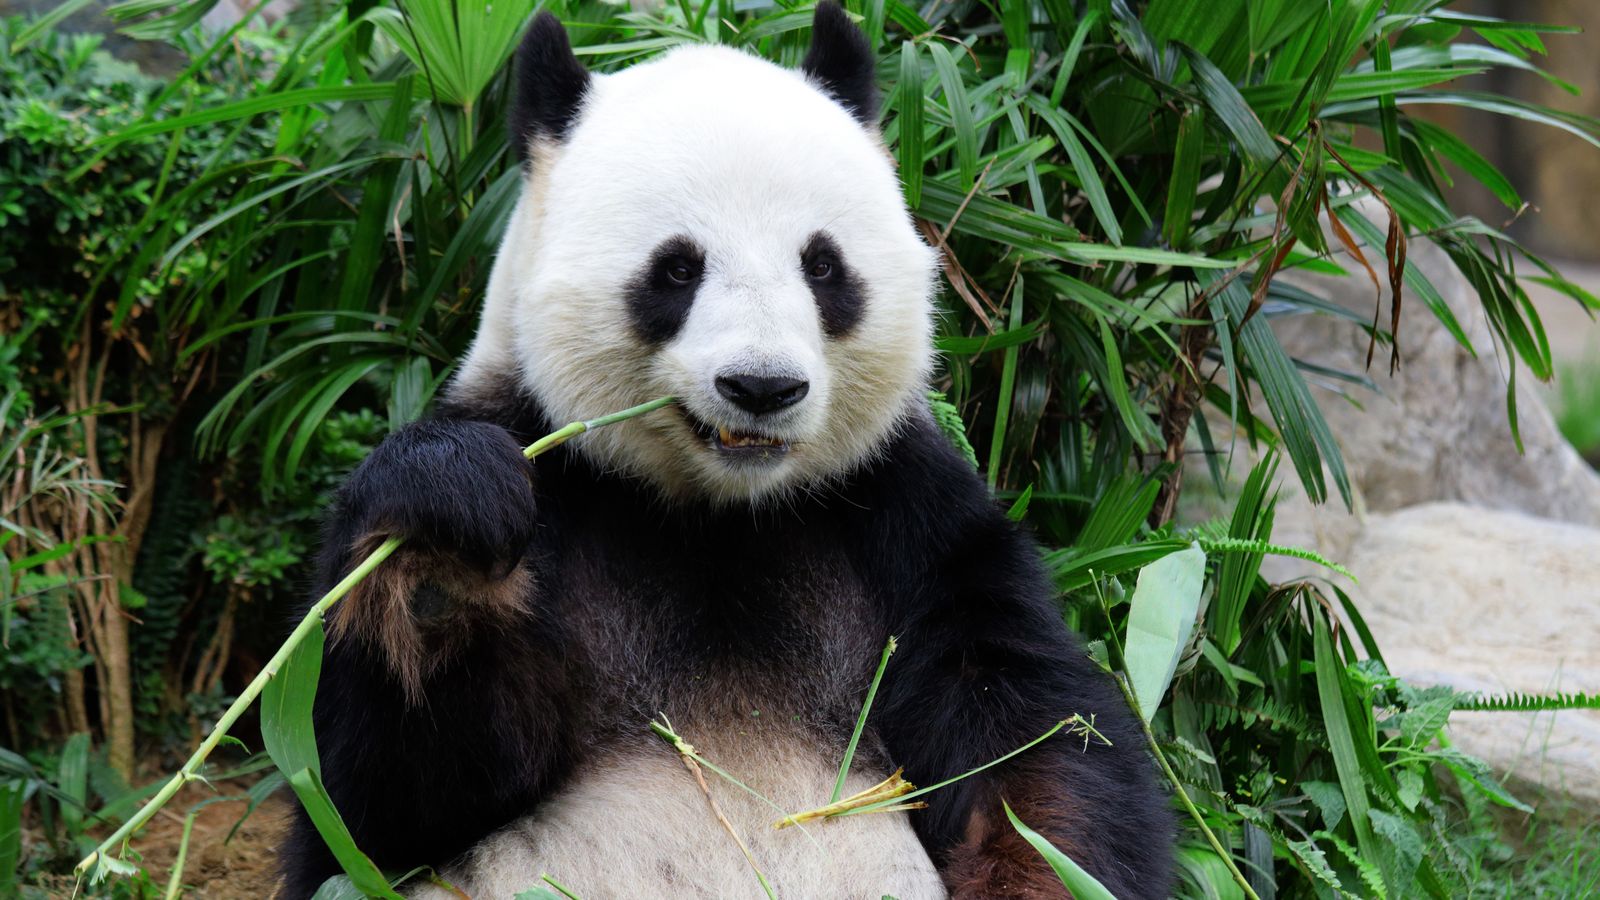 Giant pandas no longer endangered but still vulnerable, China says | World  News | Sky News